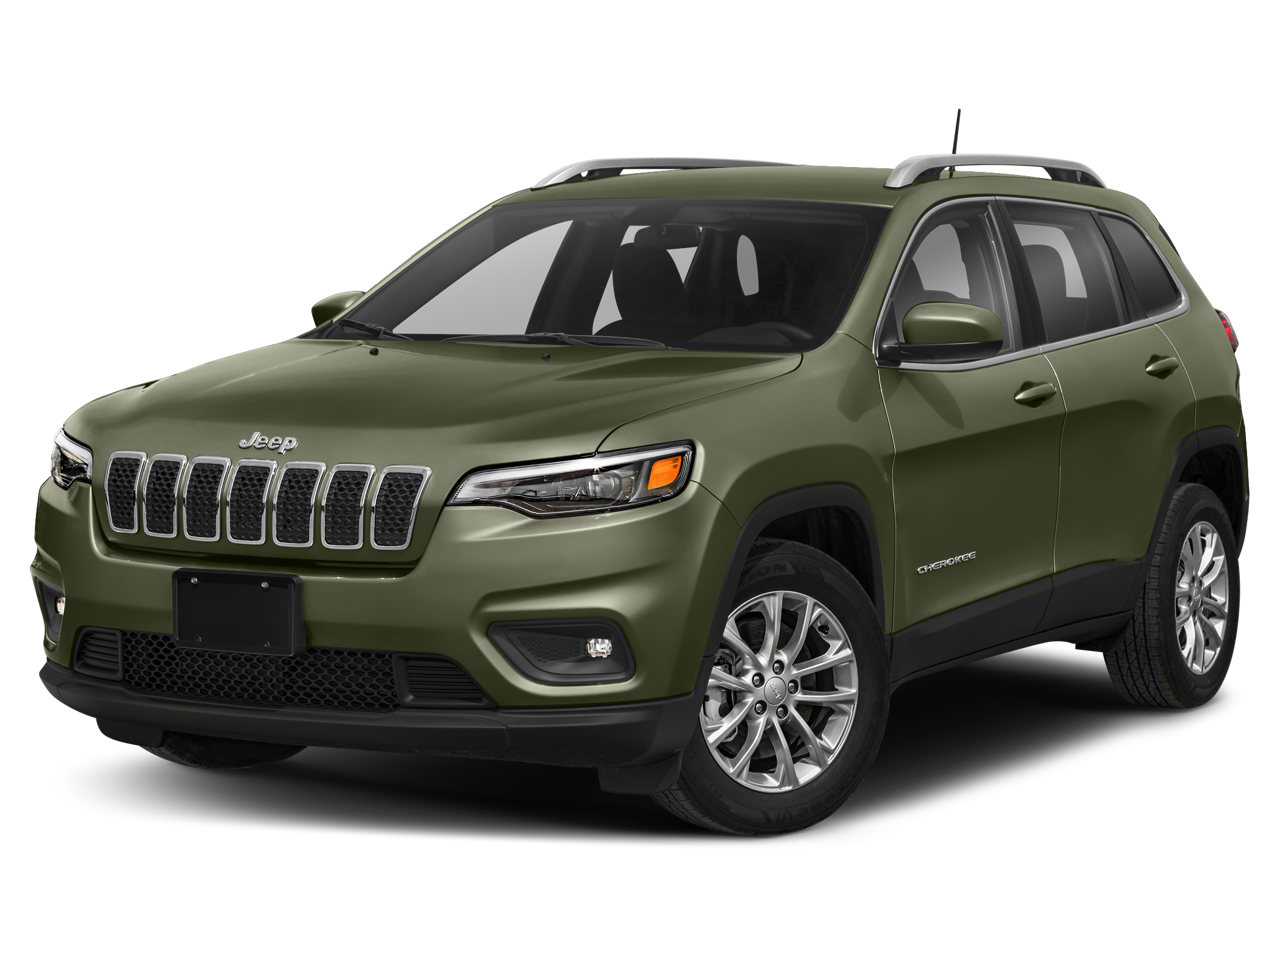 2021 Jeep Cherokee Latitude Lux (US) / Altitude (Can)